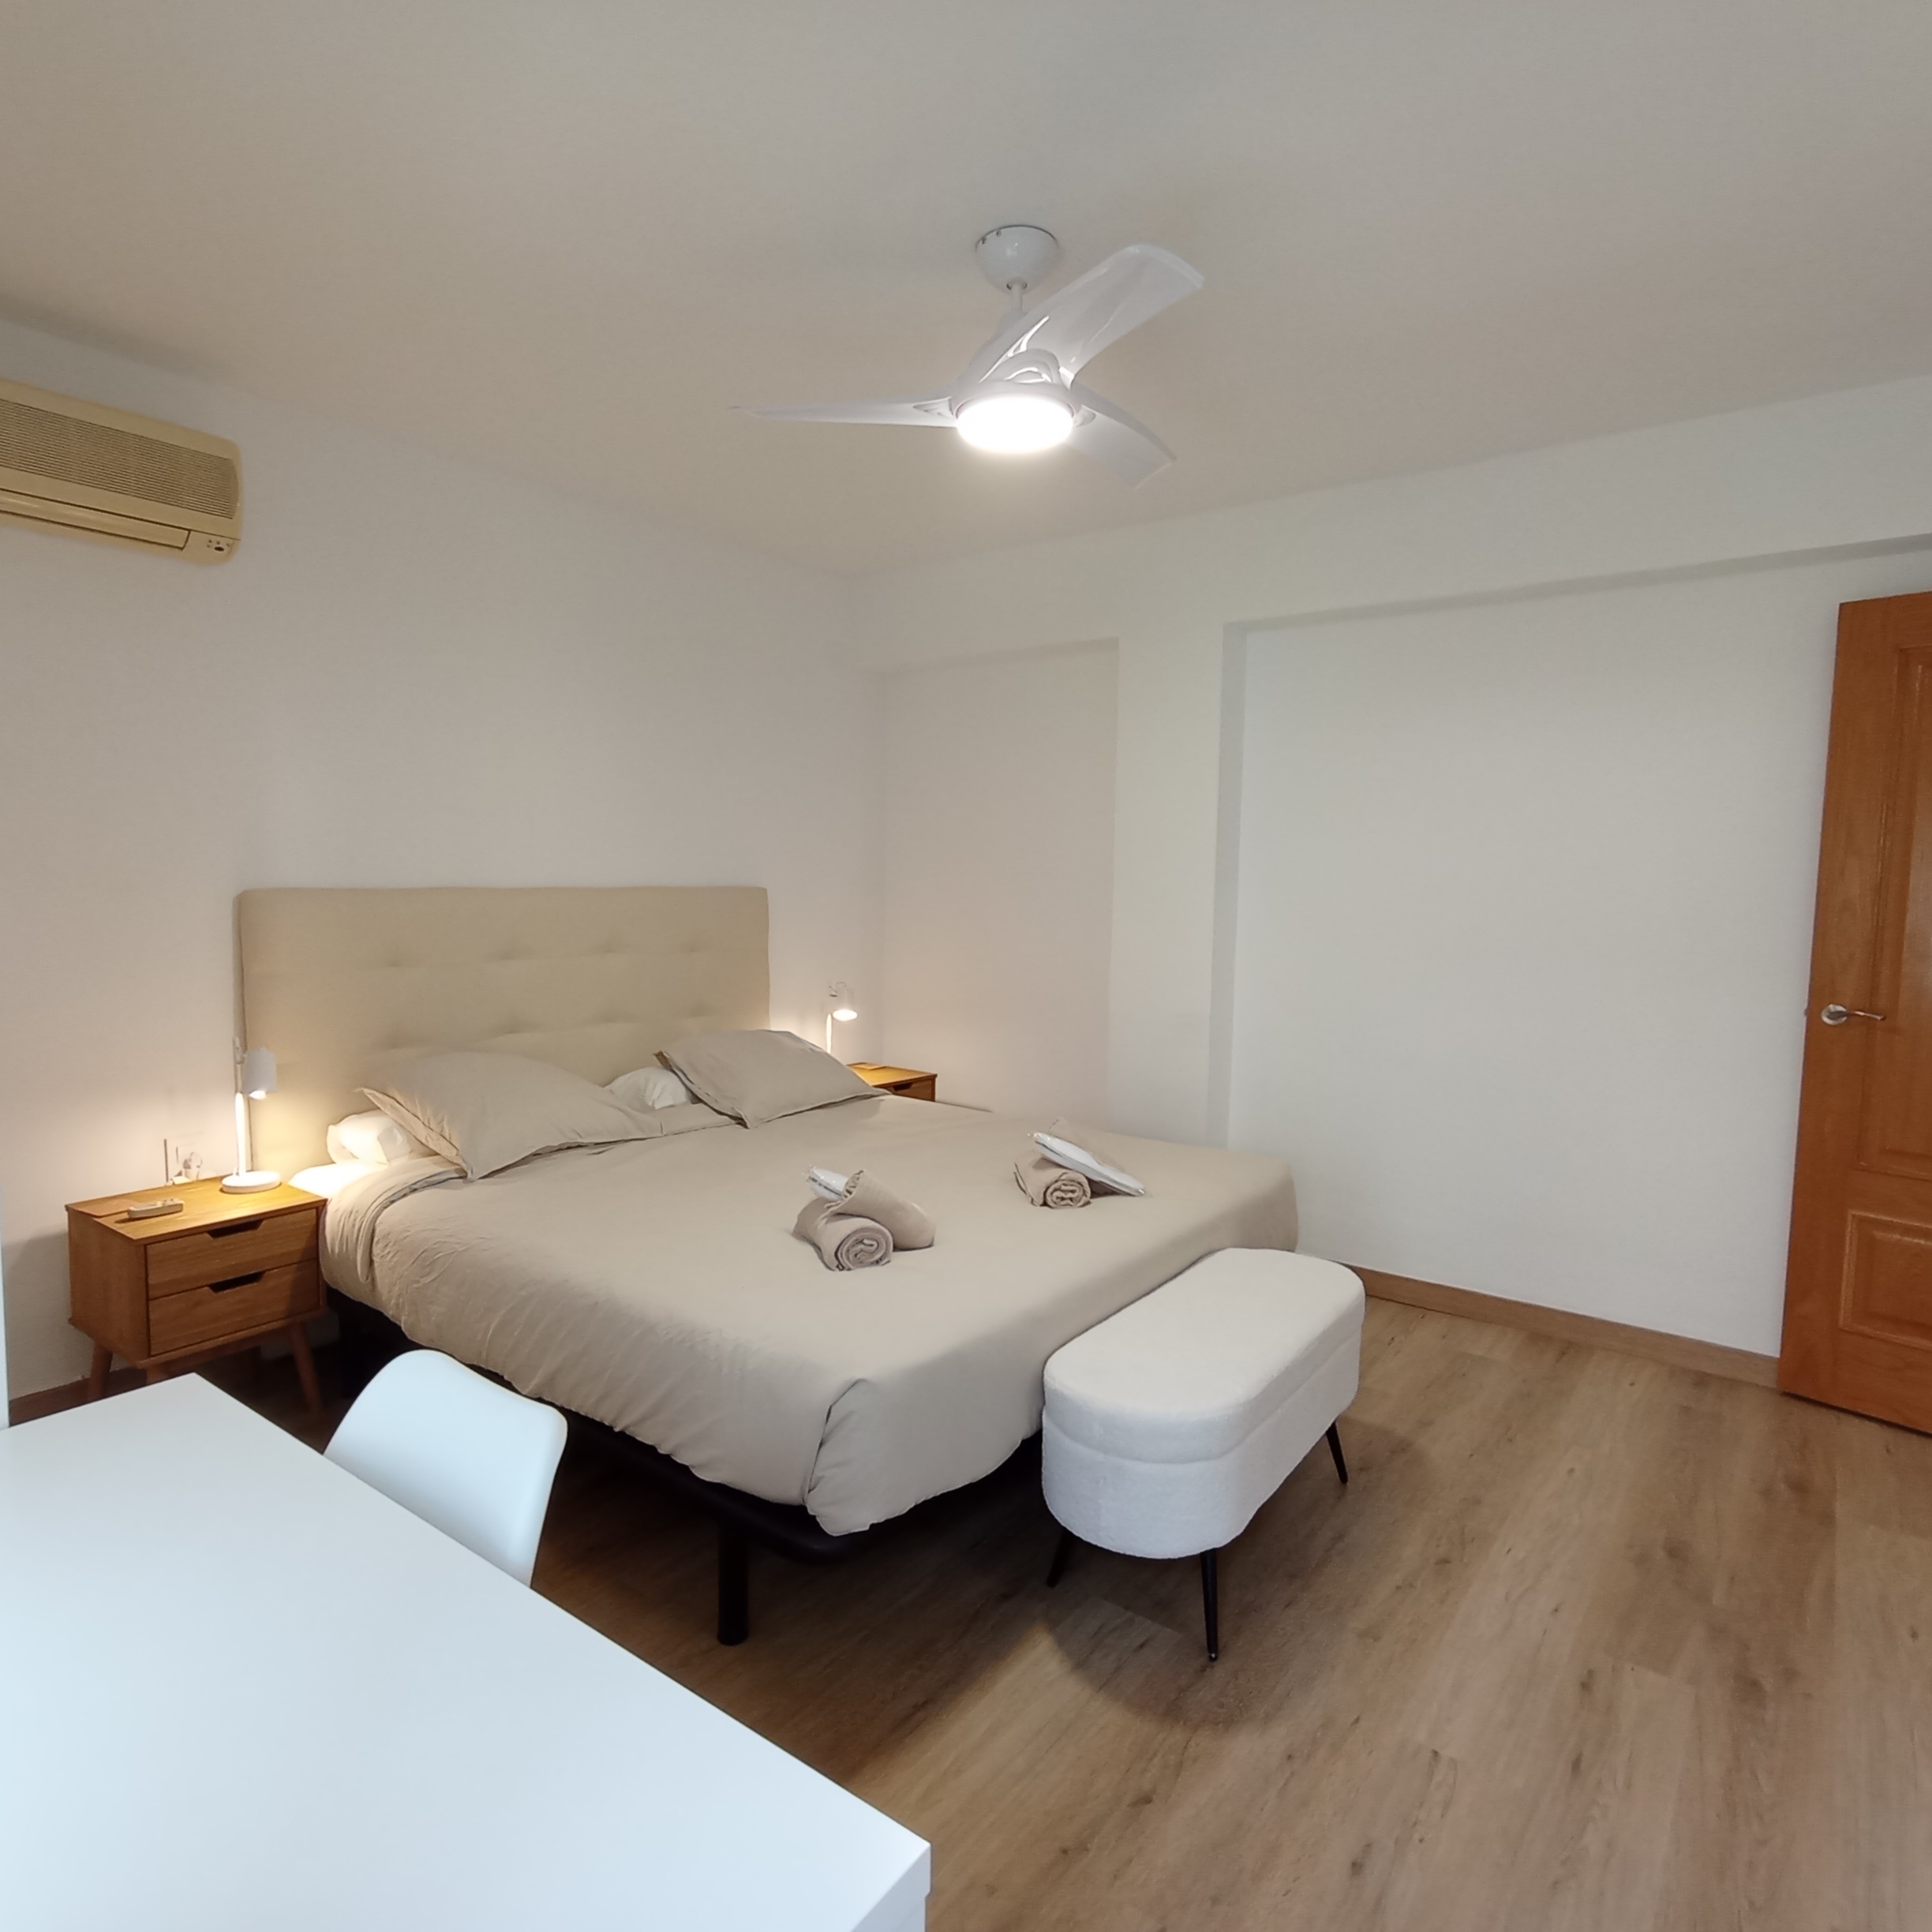 Trafalgar - 3 Bedroom apartment for rent in Valencia double bedroom 5